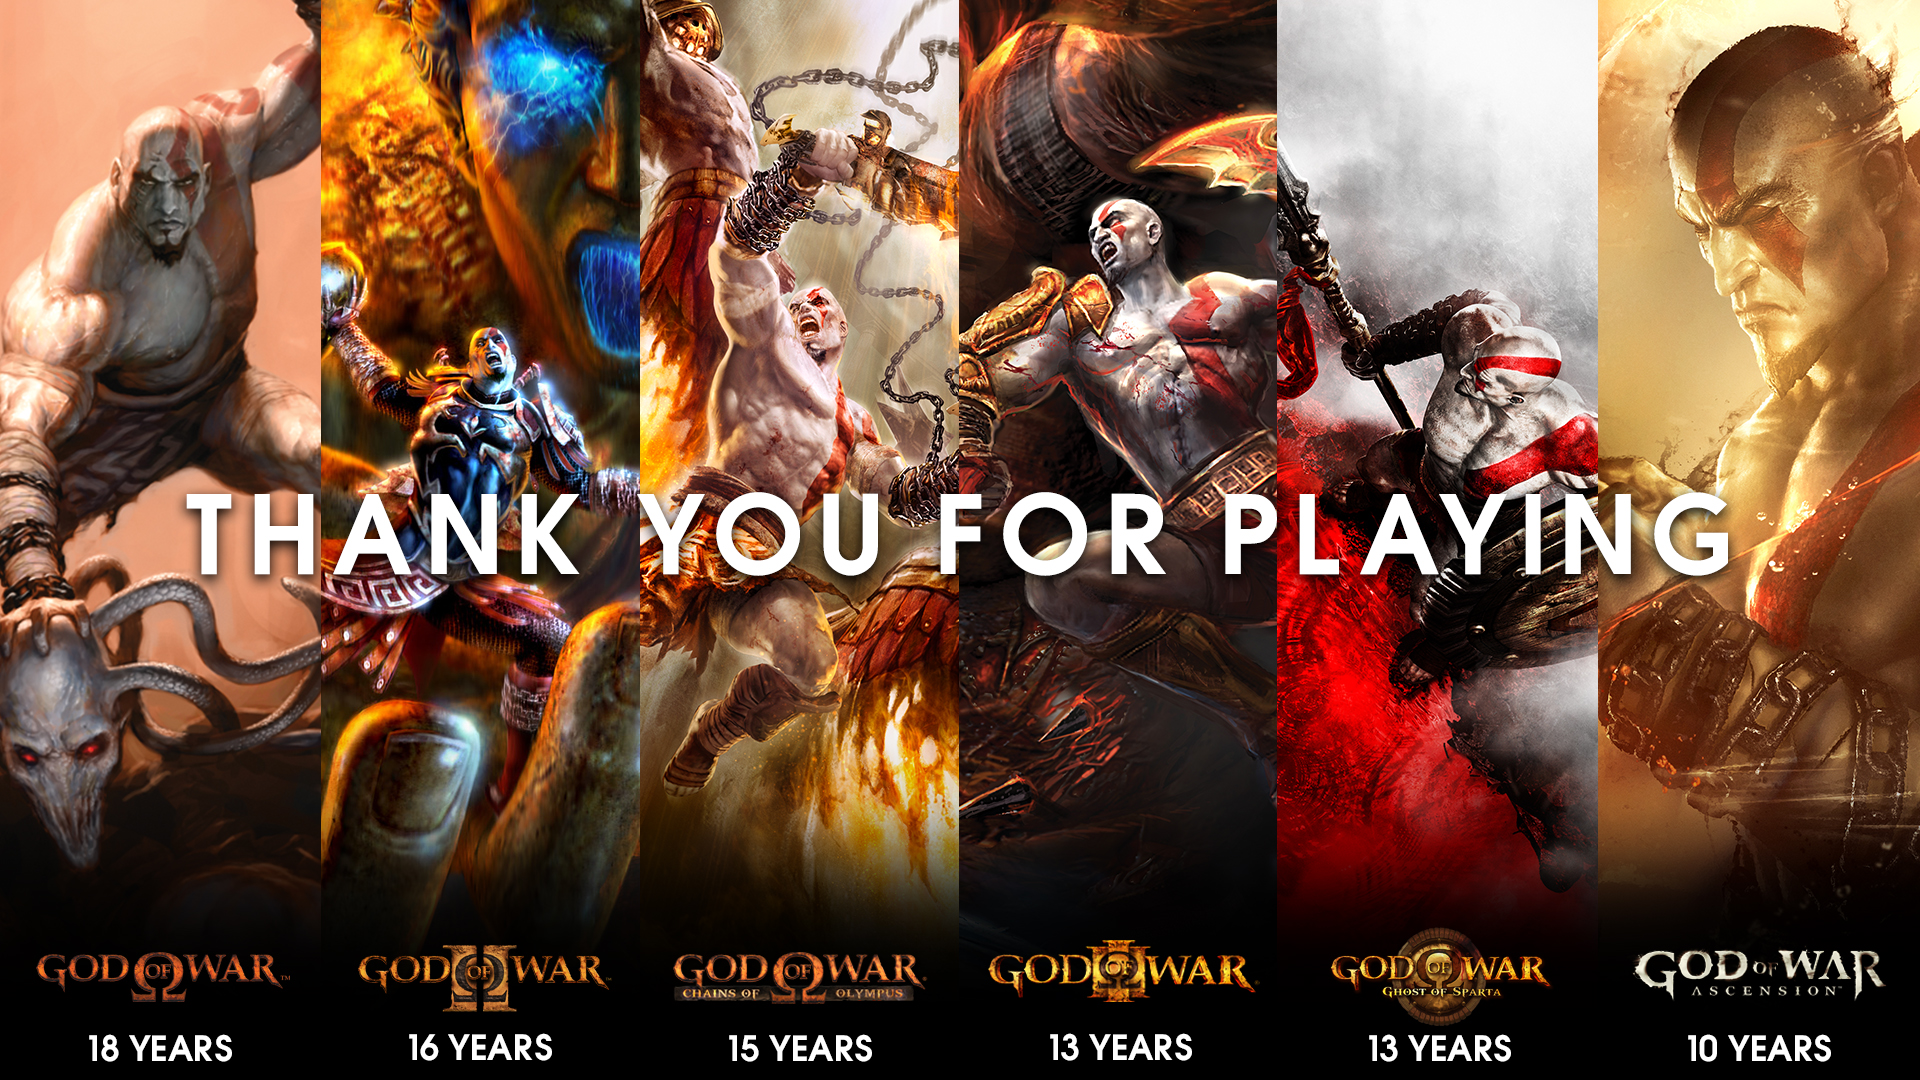 God of War got released 17 years ago today. Happy birthday, Kratos